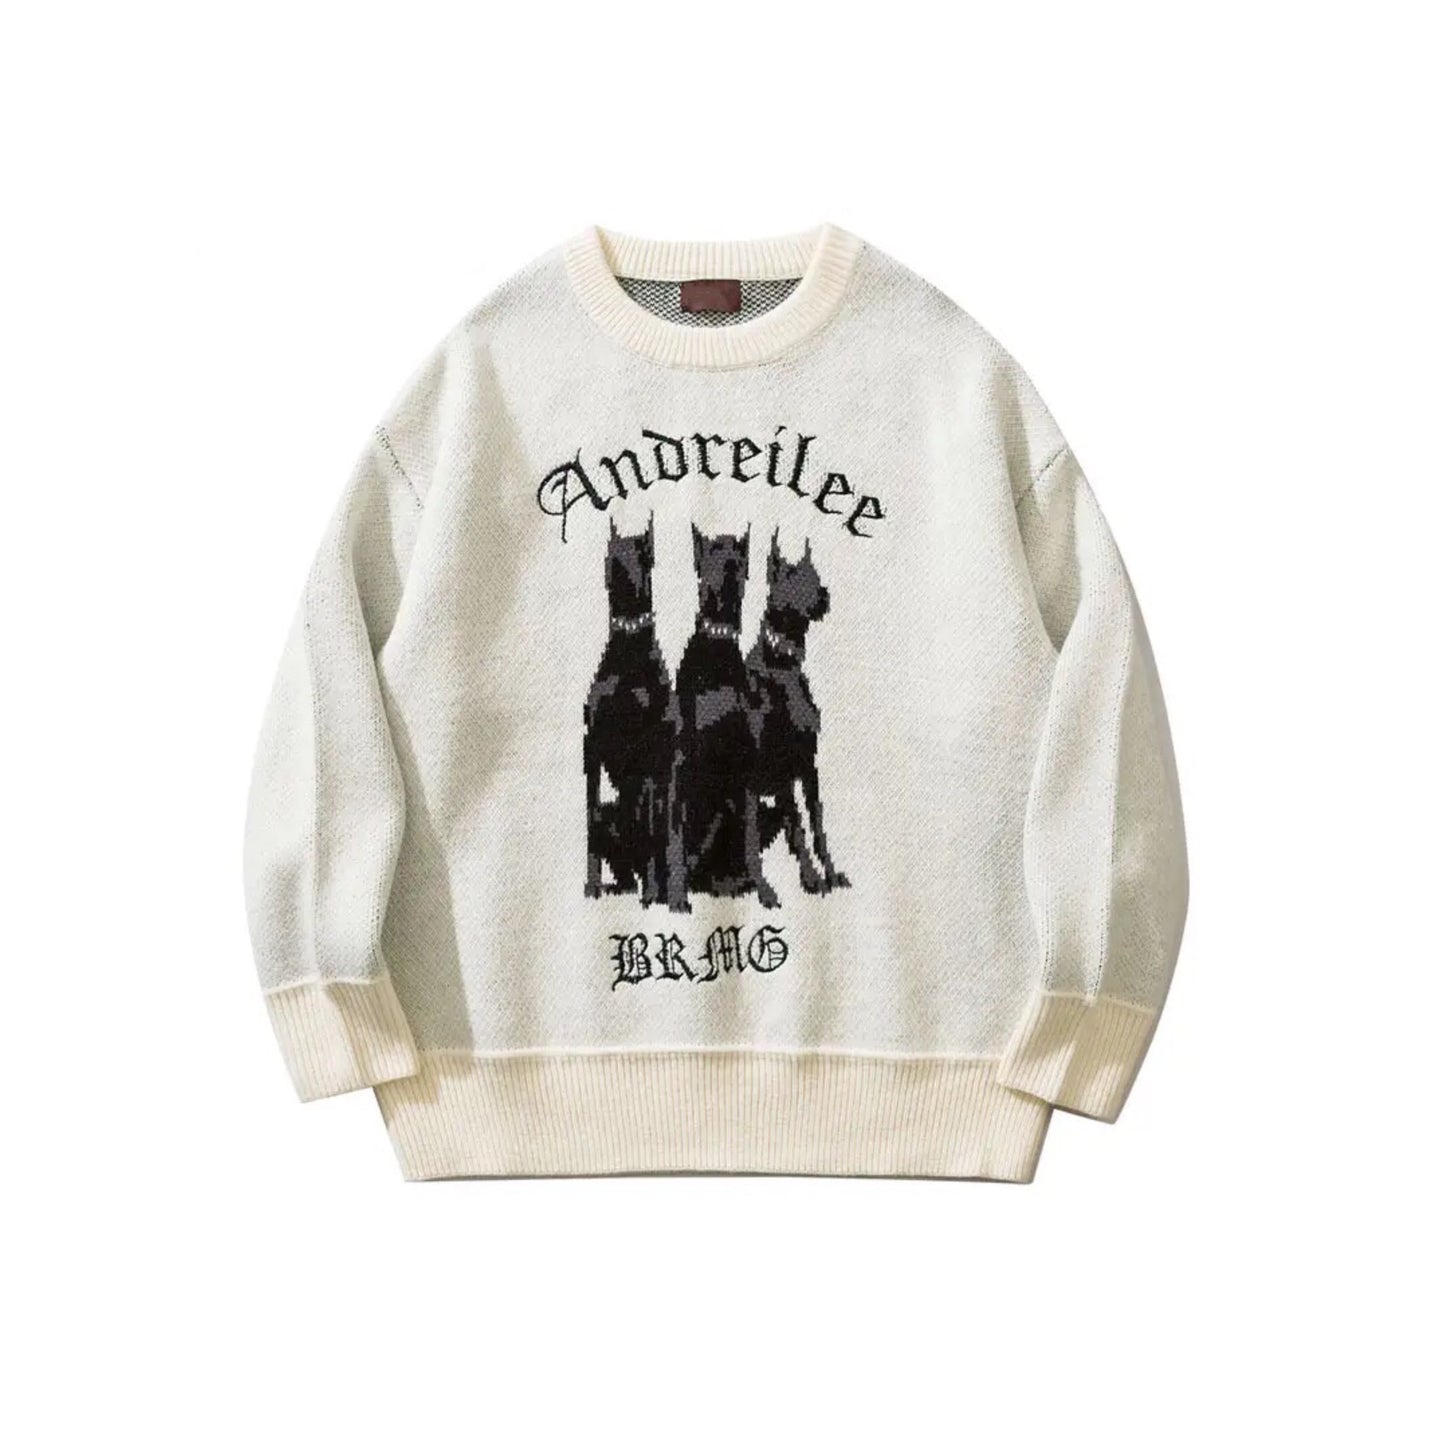 Andreilee BRMG Sweater